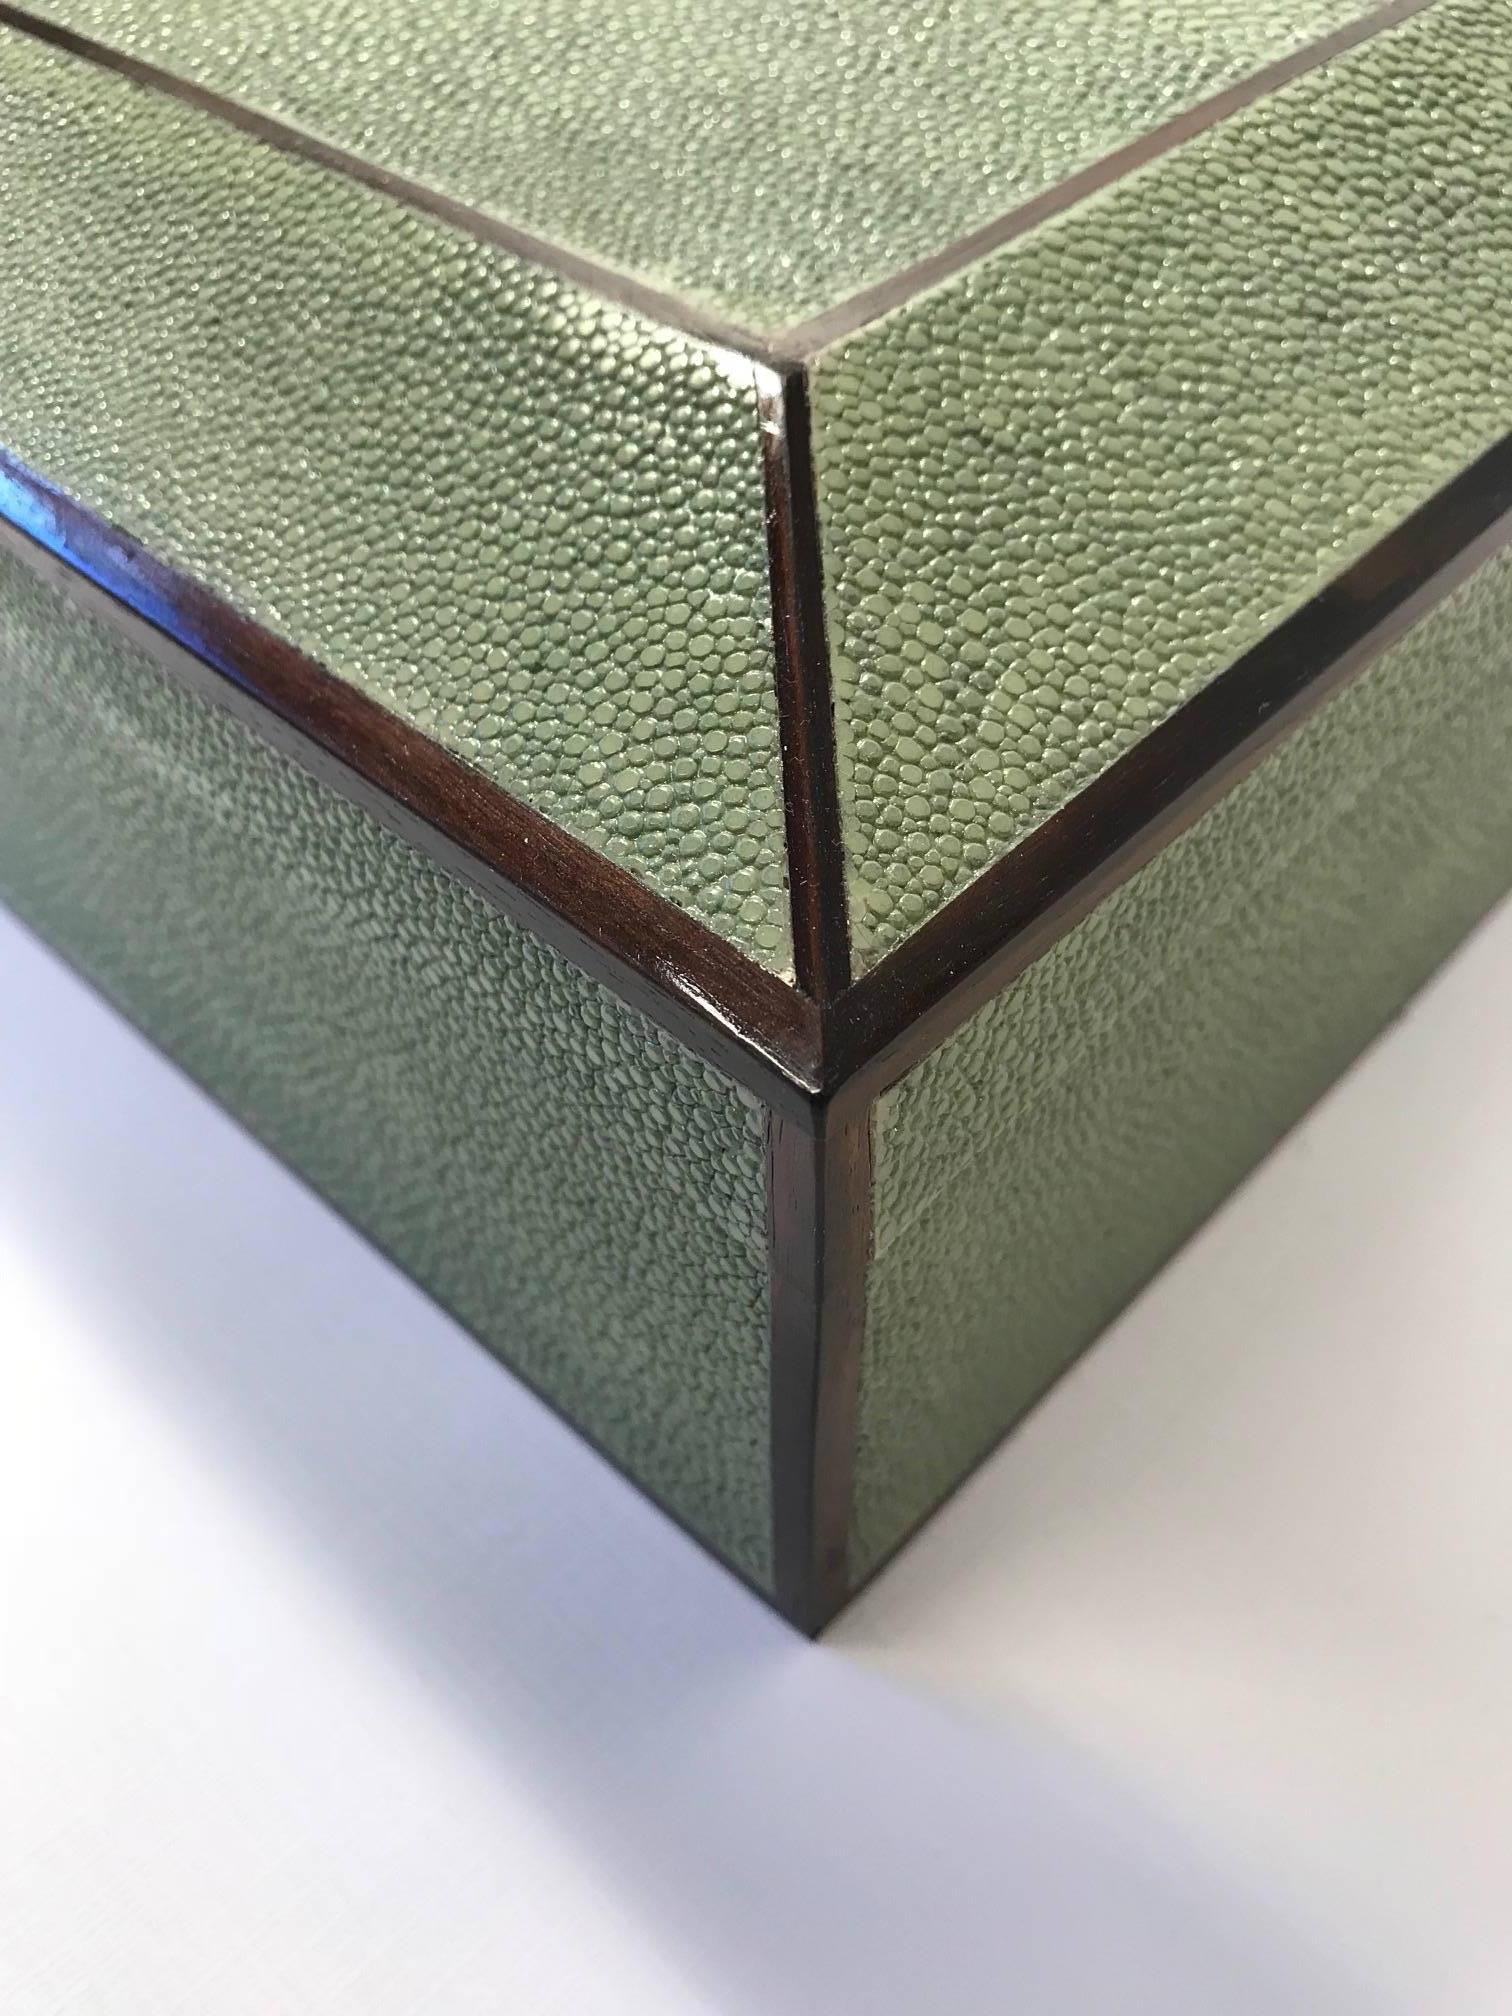 Sage color shagreen beveled shape box with Ebony inlay
We custom make any shape color and size